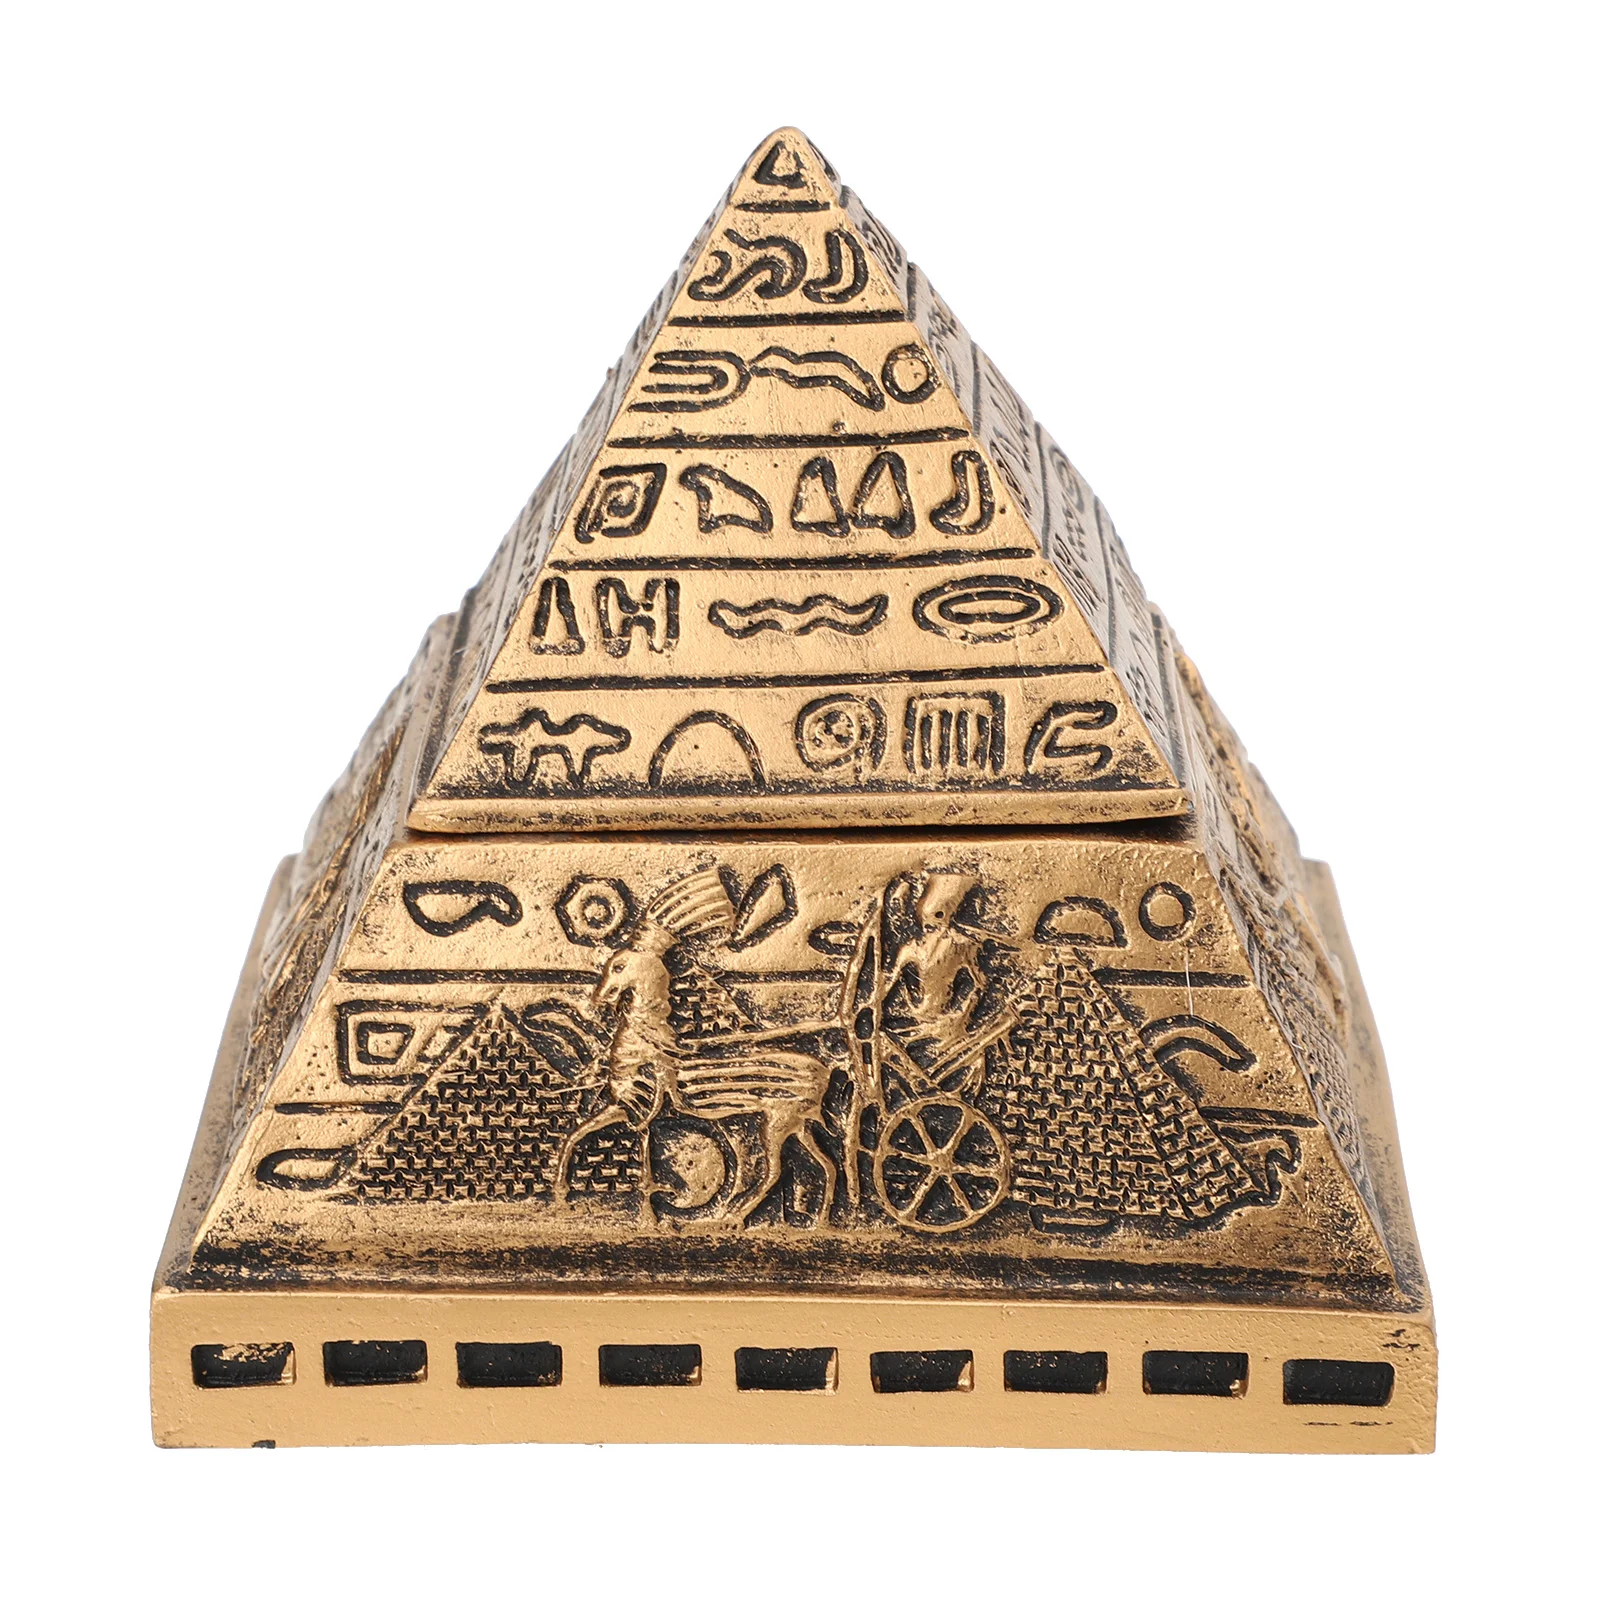 Pyramid Keepsake Box House Ornaments Travel Dining Room Table Decor Sculpture Adornment Organizer